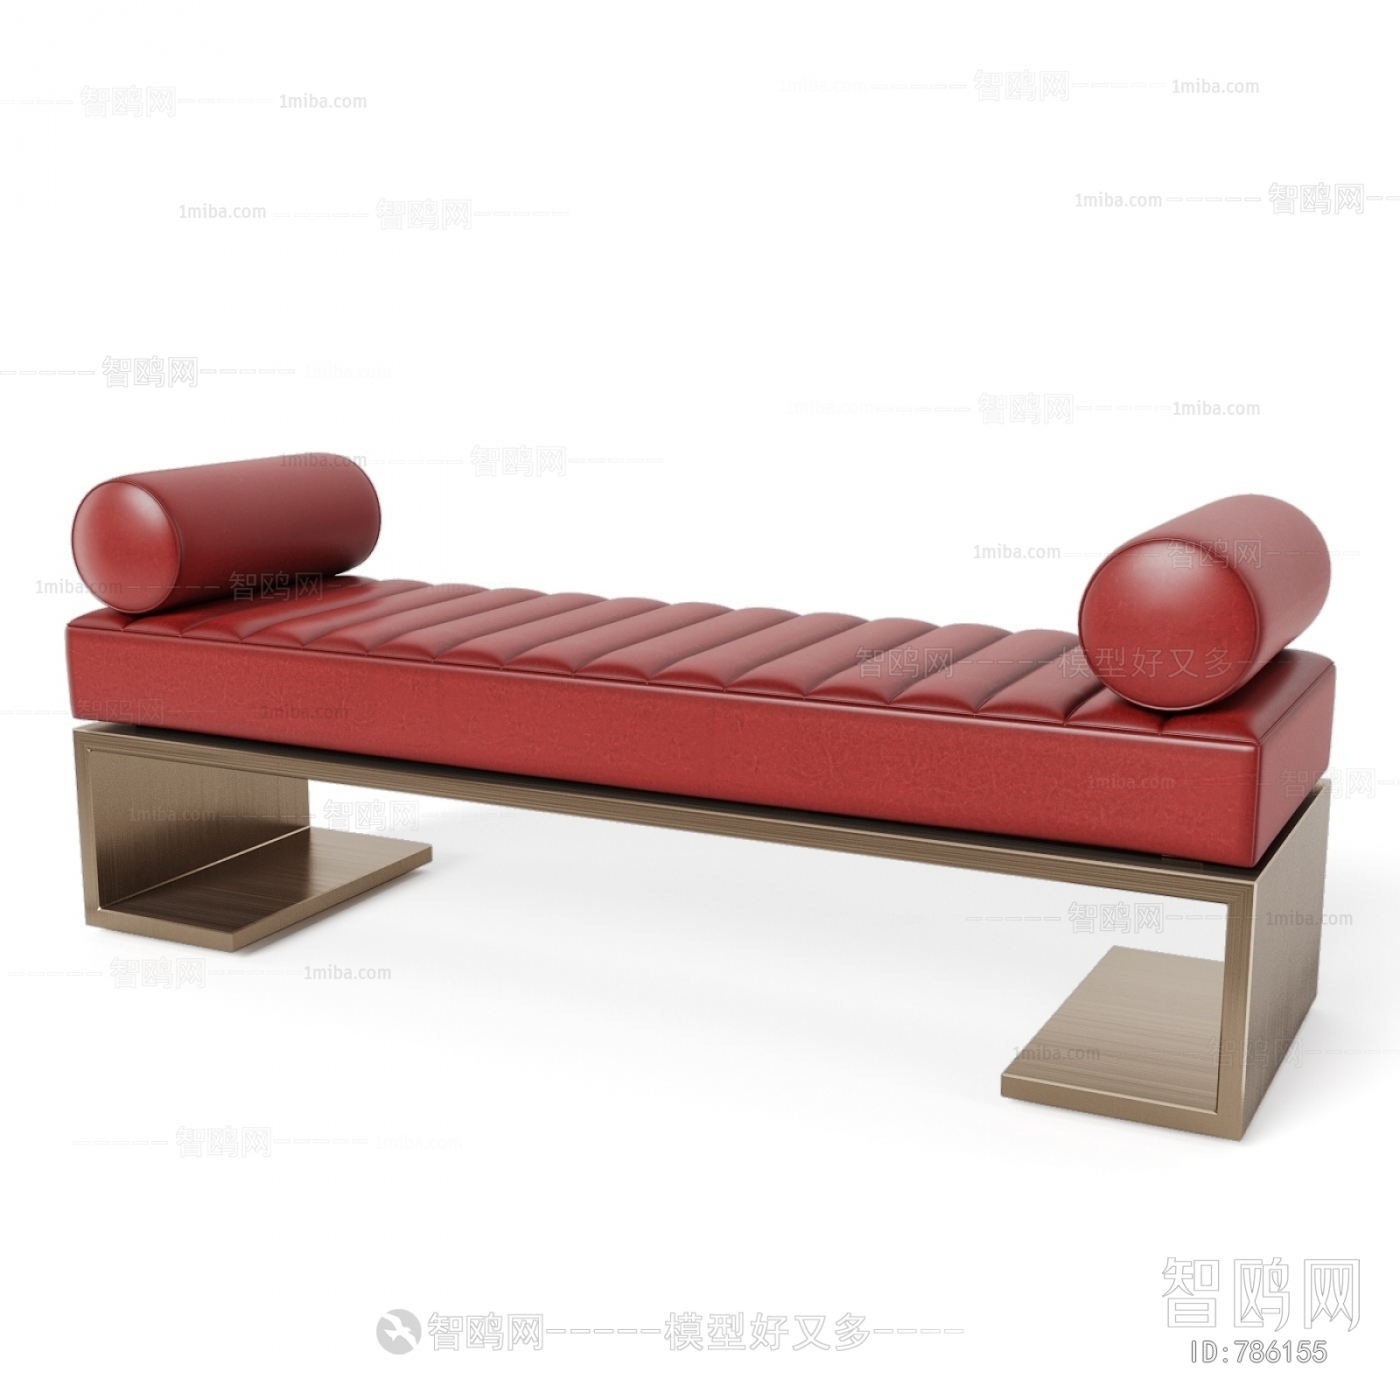 Post Modern Style Bench